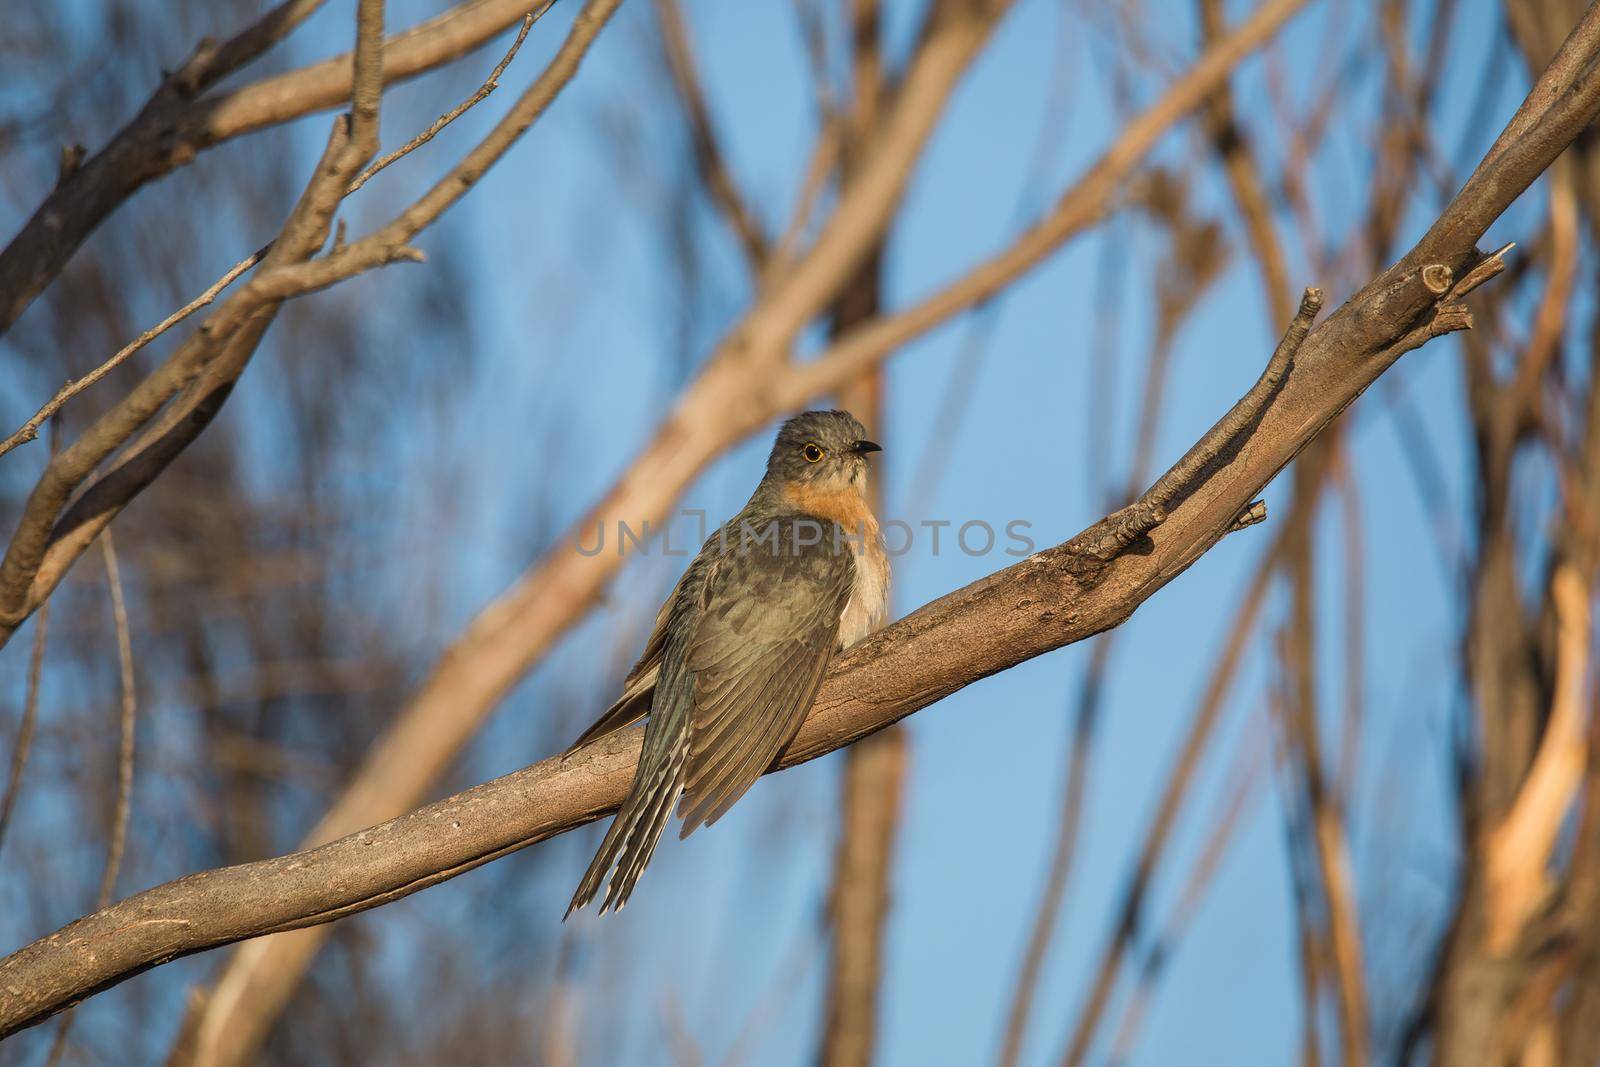 Fan-tailed Cuckoo (Cacomantis flabelliformis) by braydenstanfordphoto